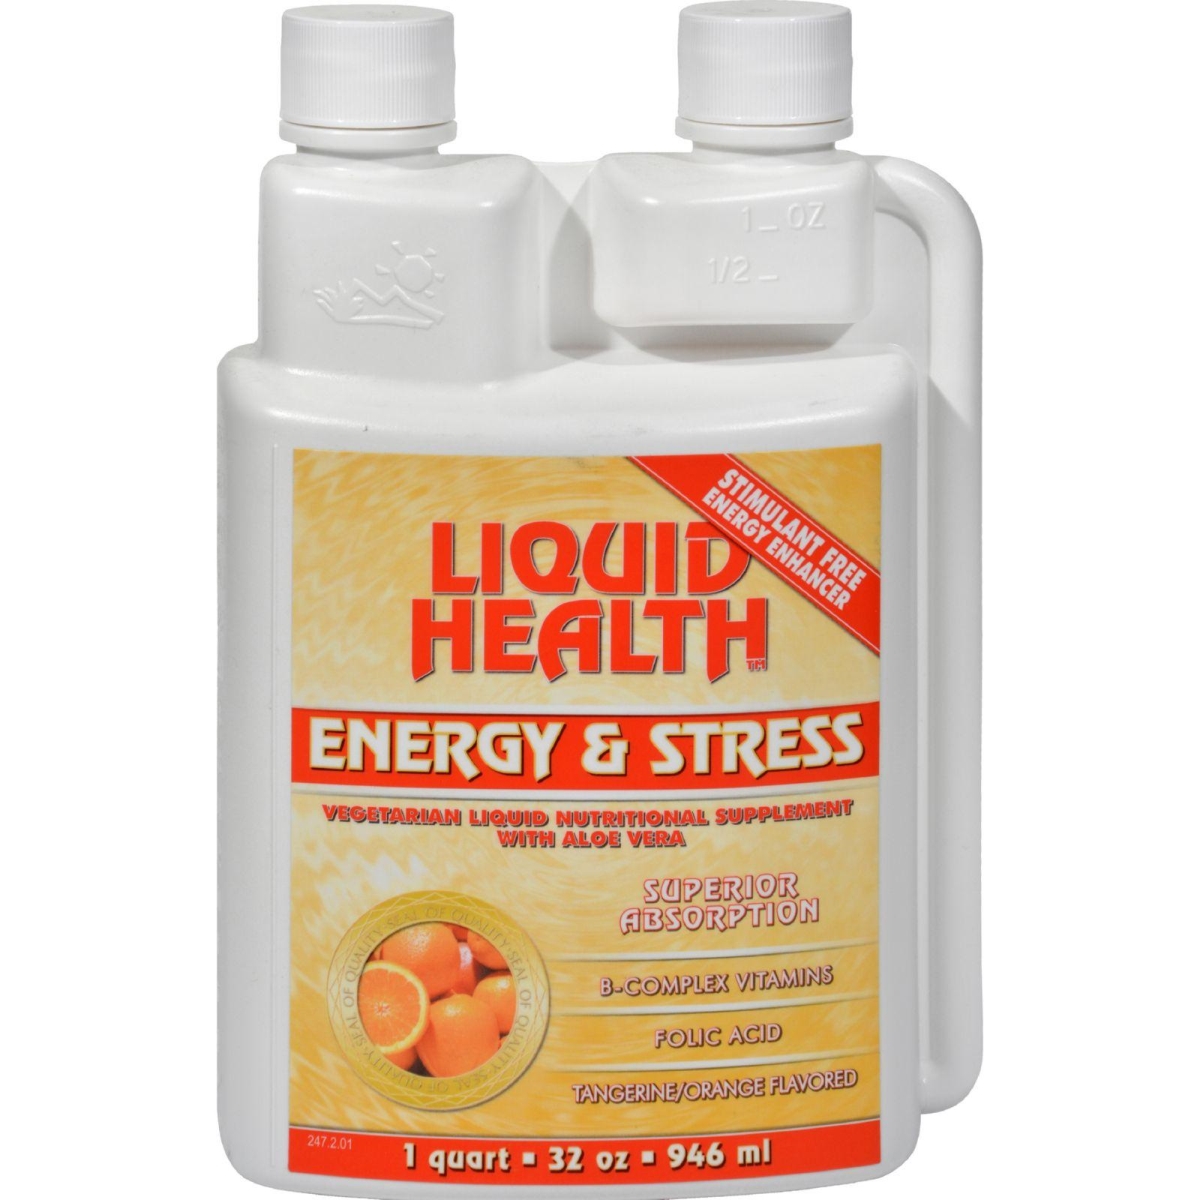 Hg0421578 32 Fl Oz Liquid Health Energy & Stress Tangerine Orange